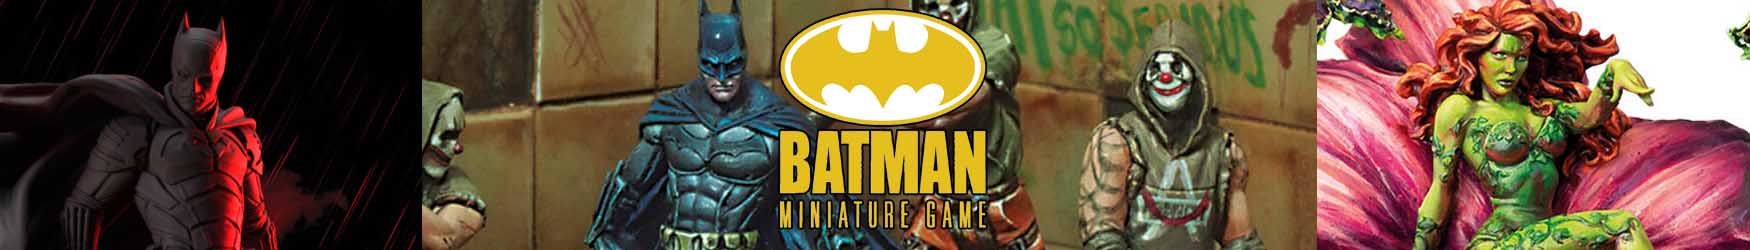 Batman miniature game tag